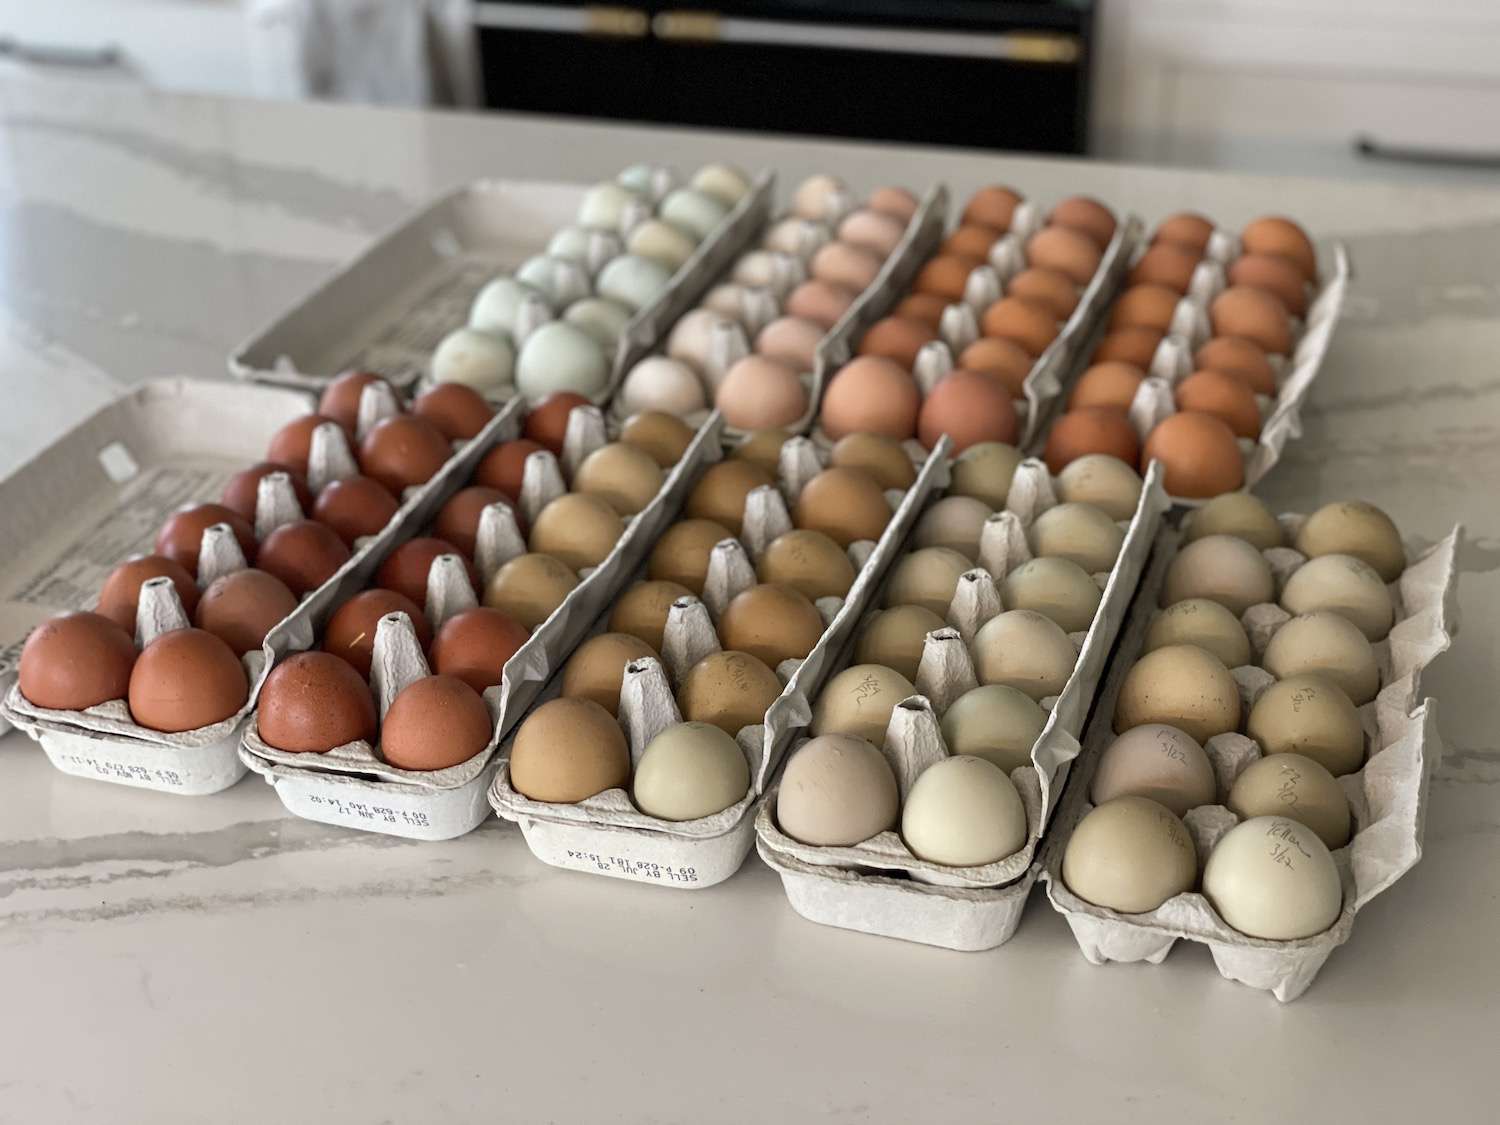 9 dozen fertile hatching eggs out on a kitchen island